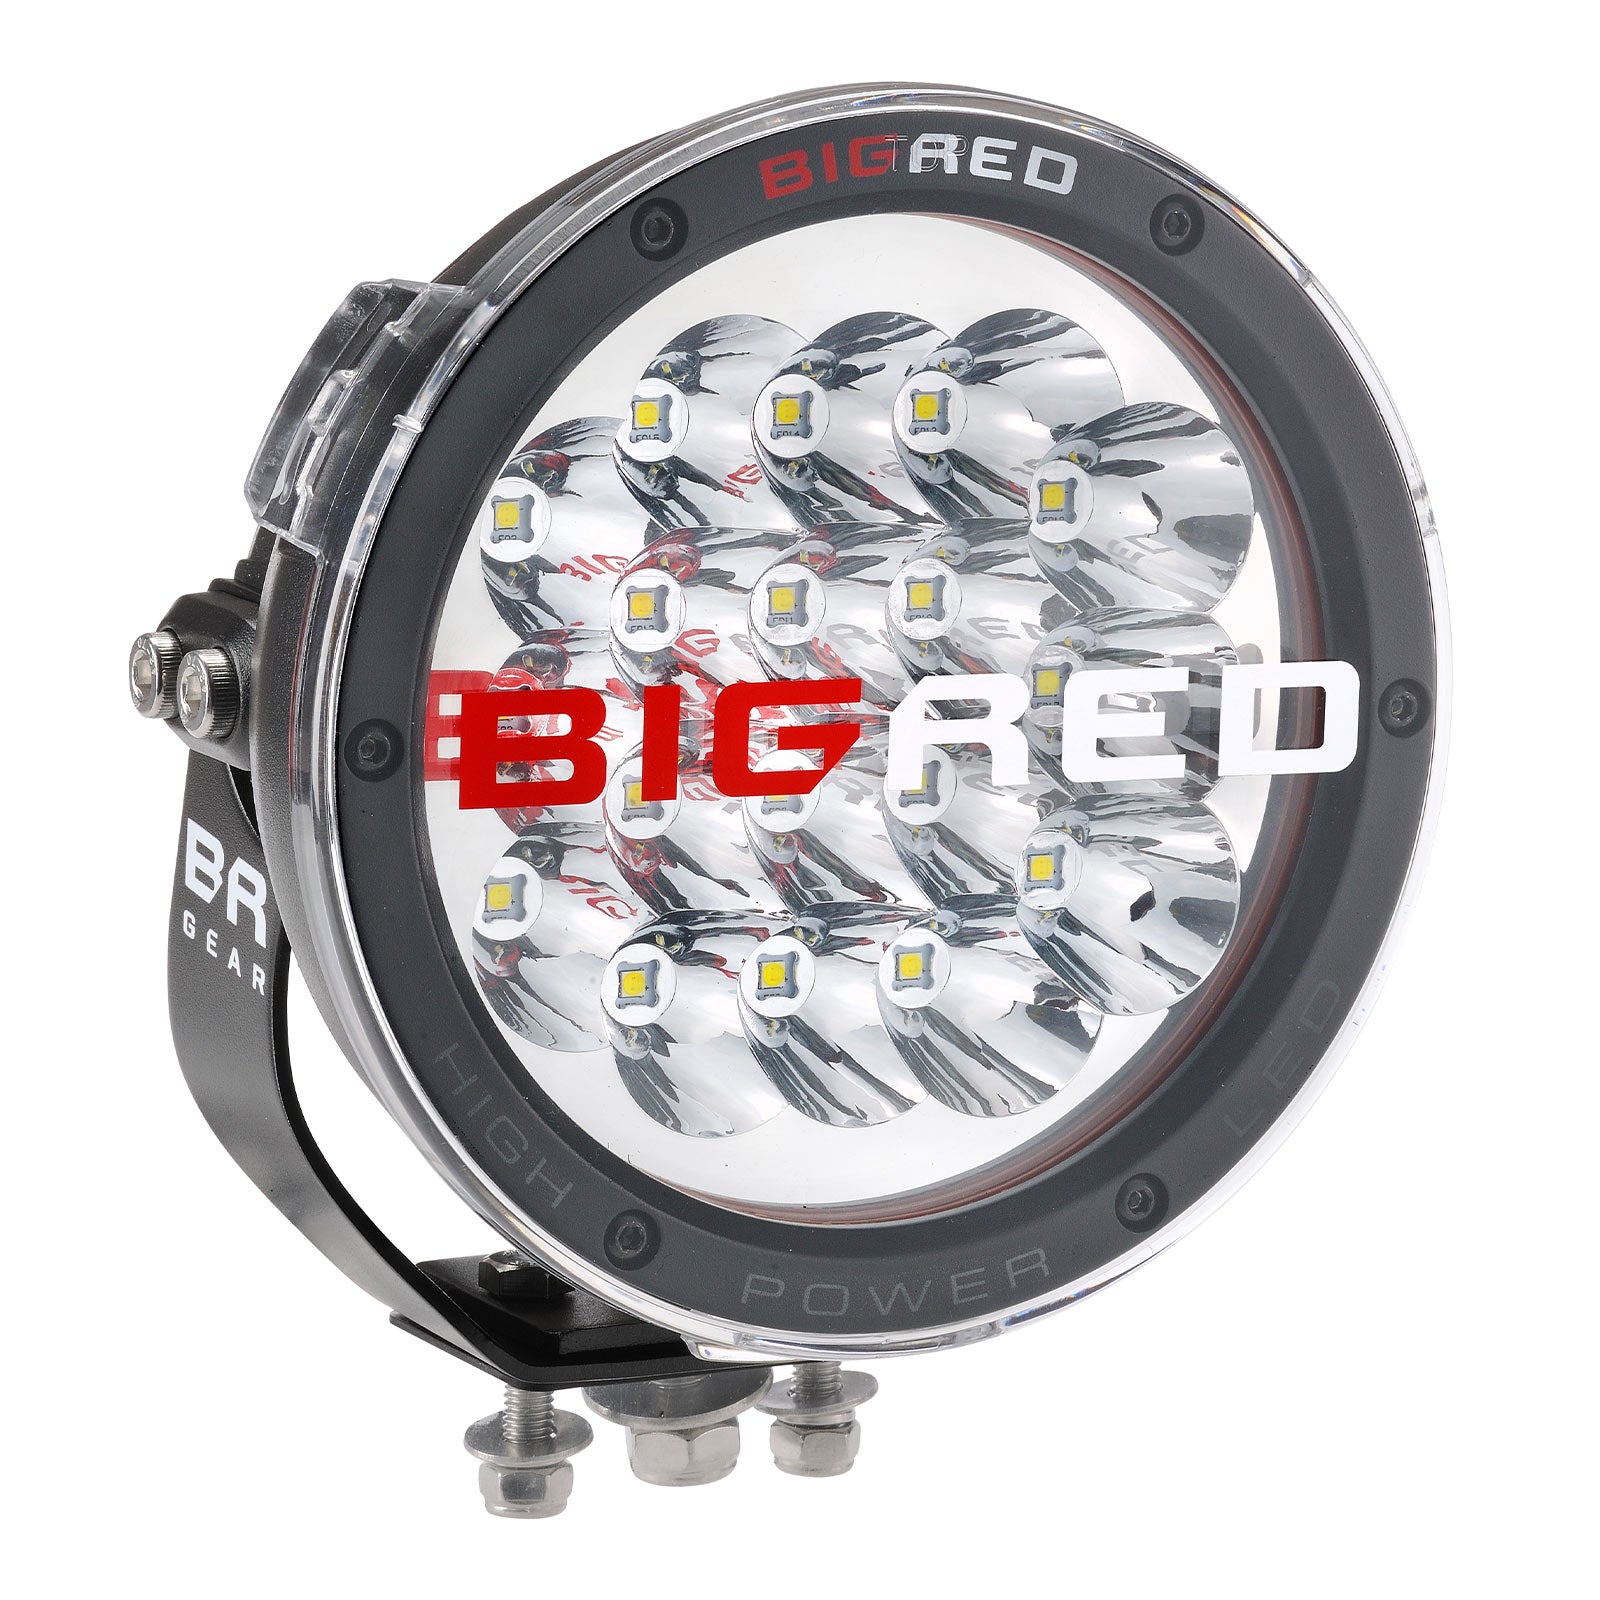 BIG RED 180 DRIVING LAMP